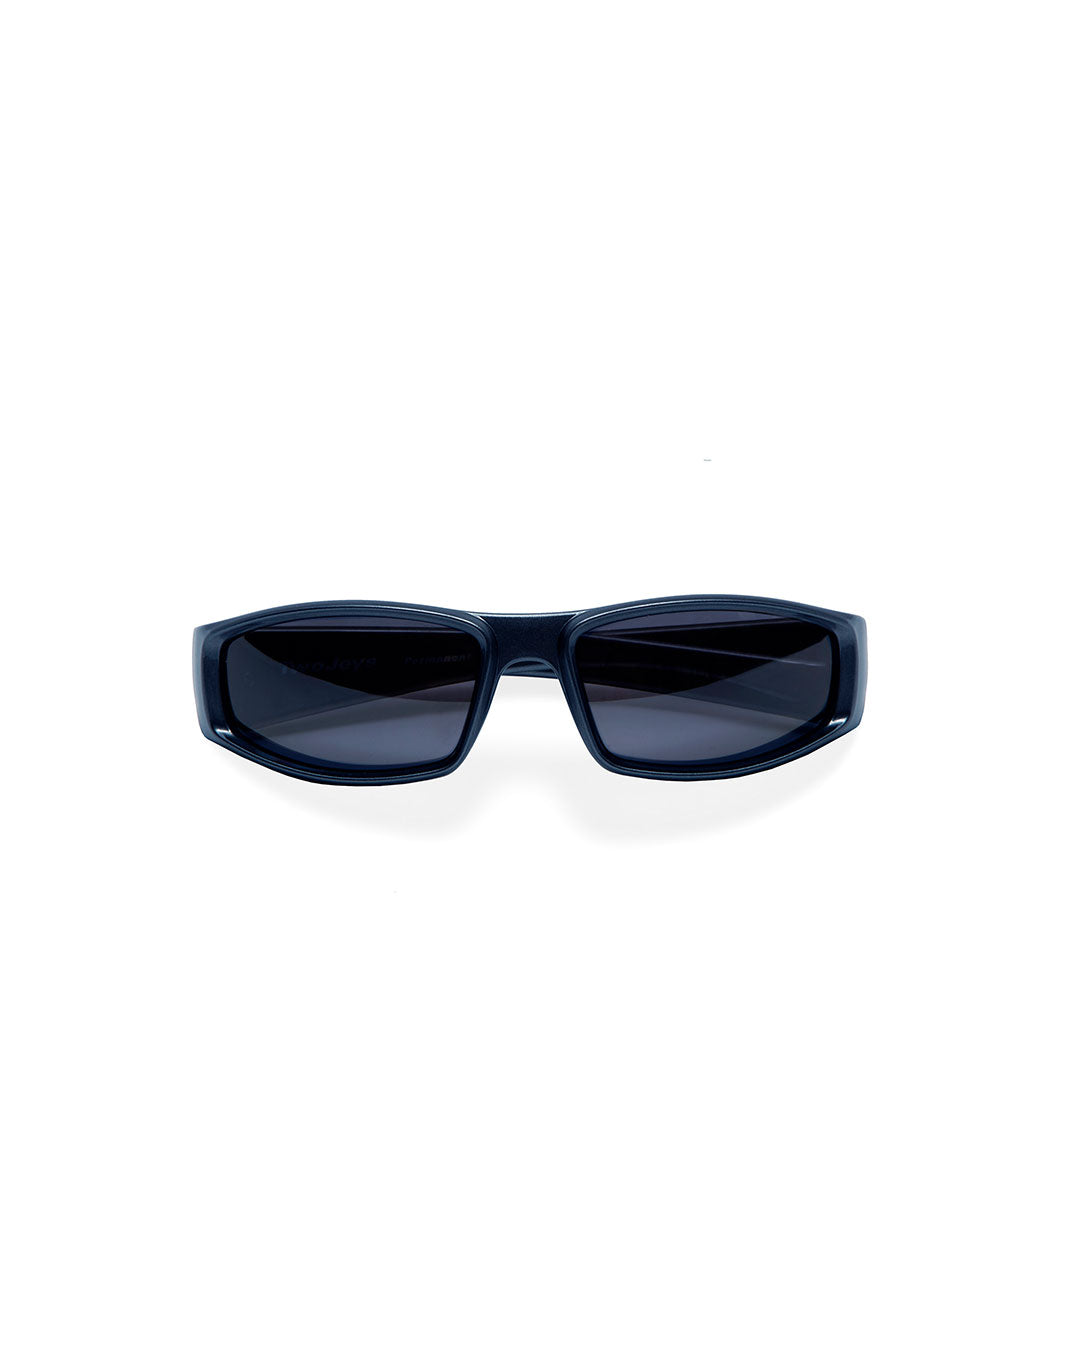 TwoJeys Ultra Navy Sunglasses